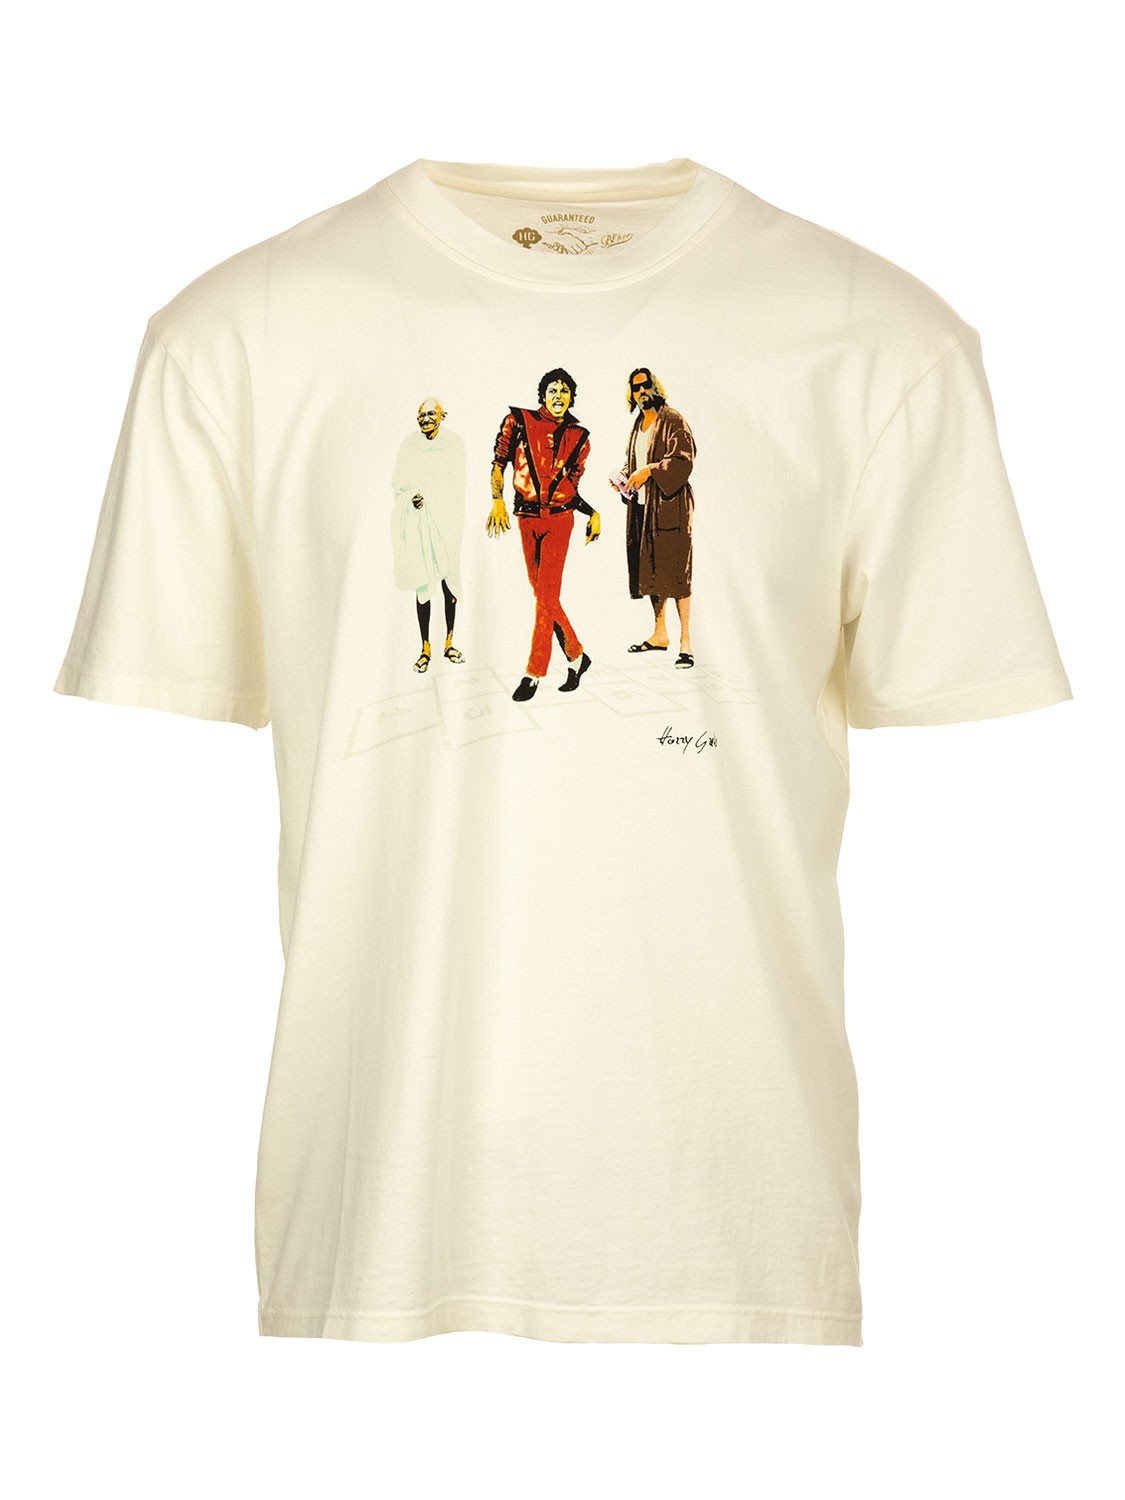 Bl'ker T-shirt Uomo Graphic Trio